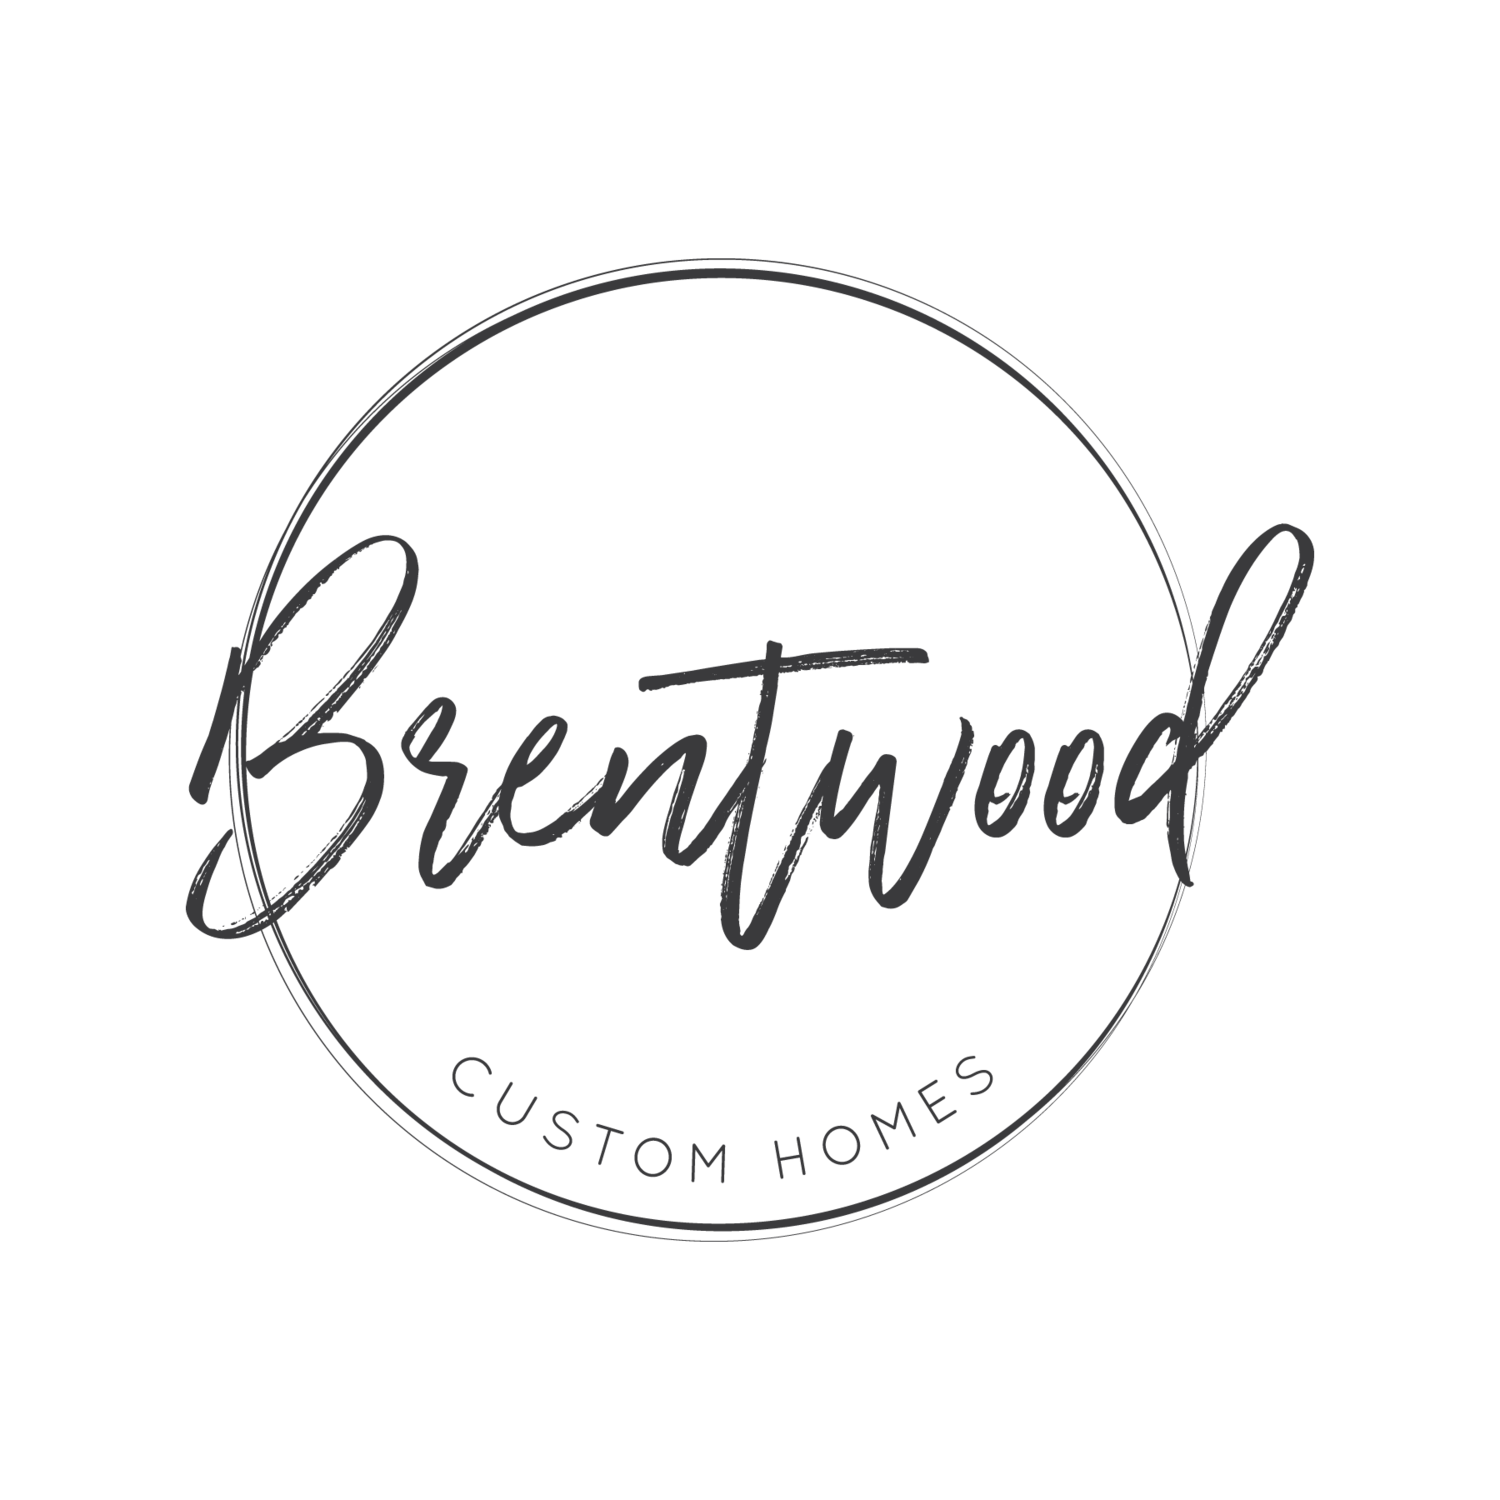 Brentwood Custom Homes 